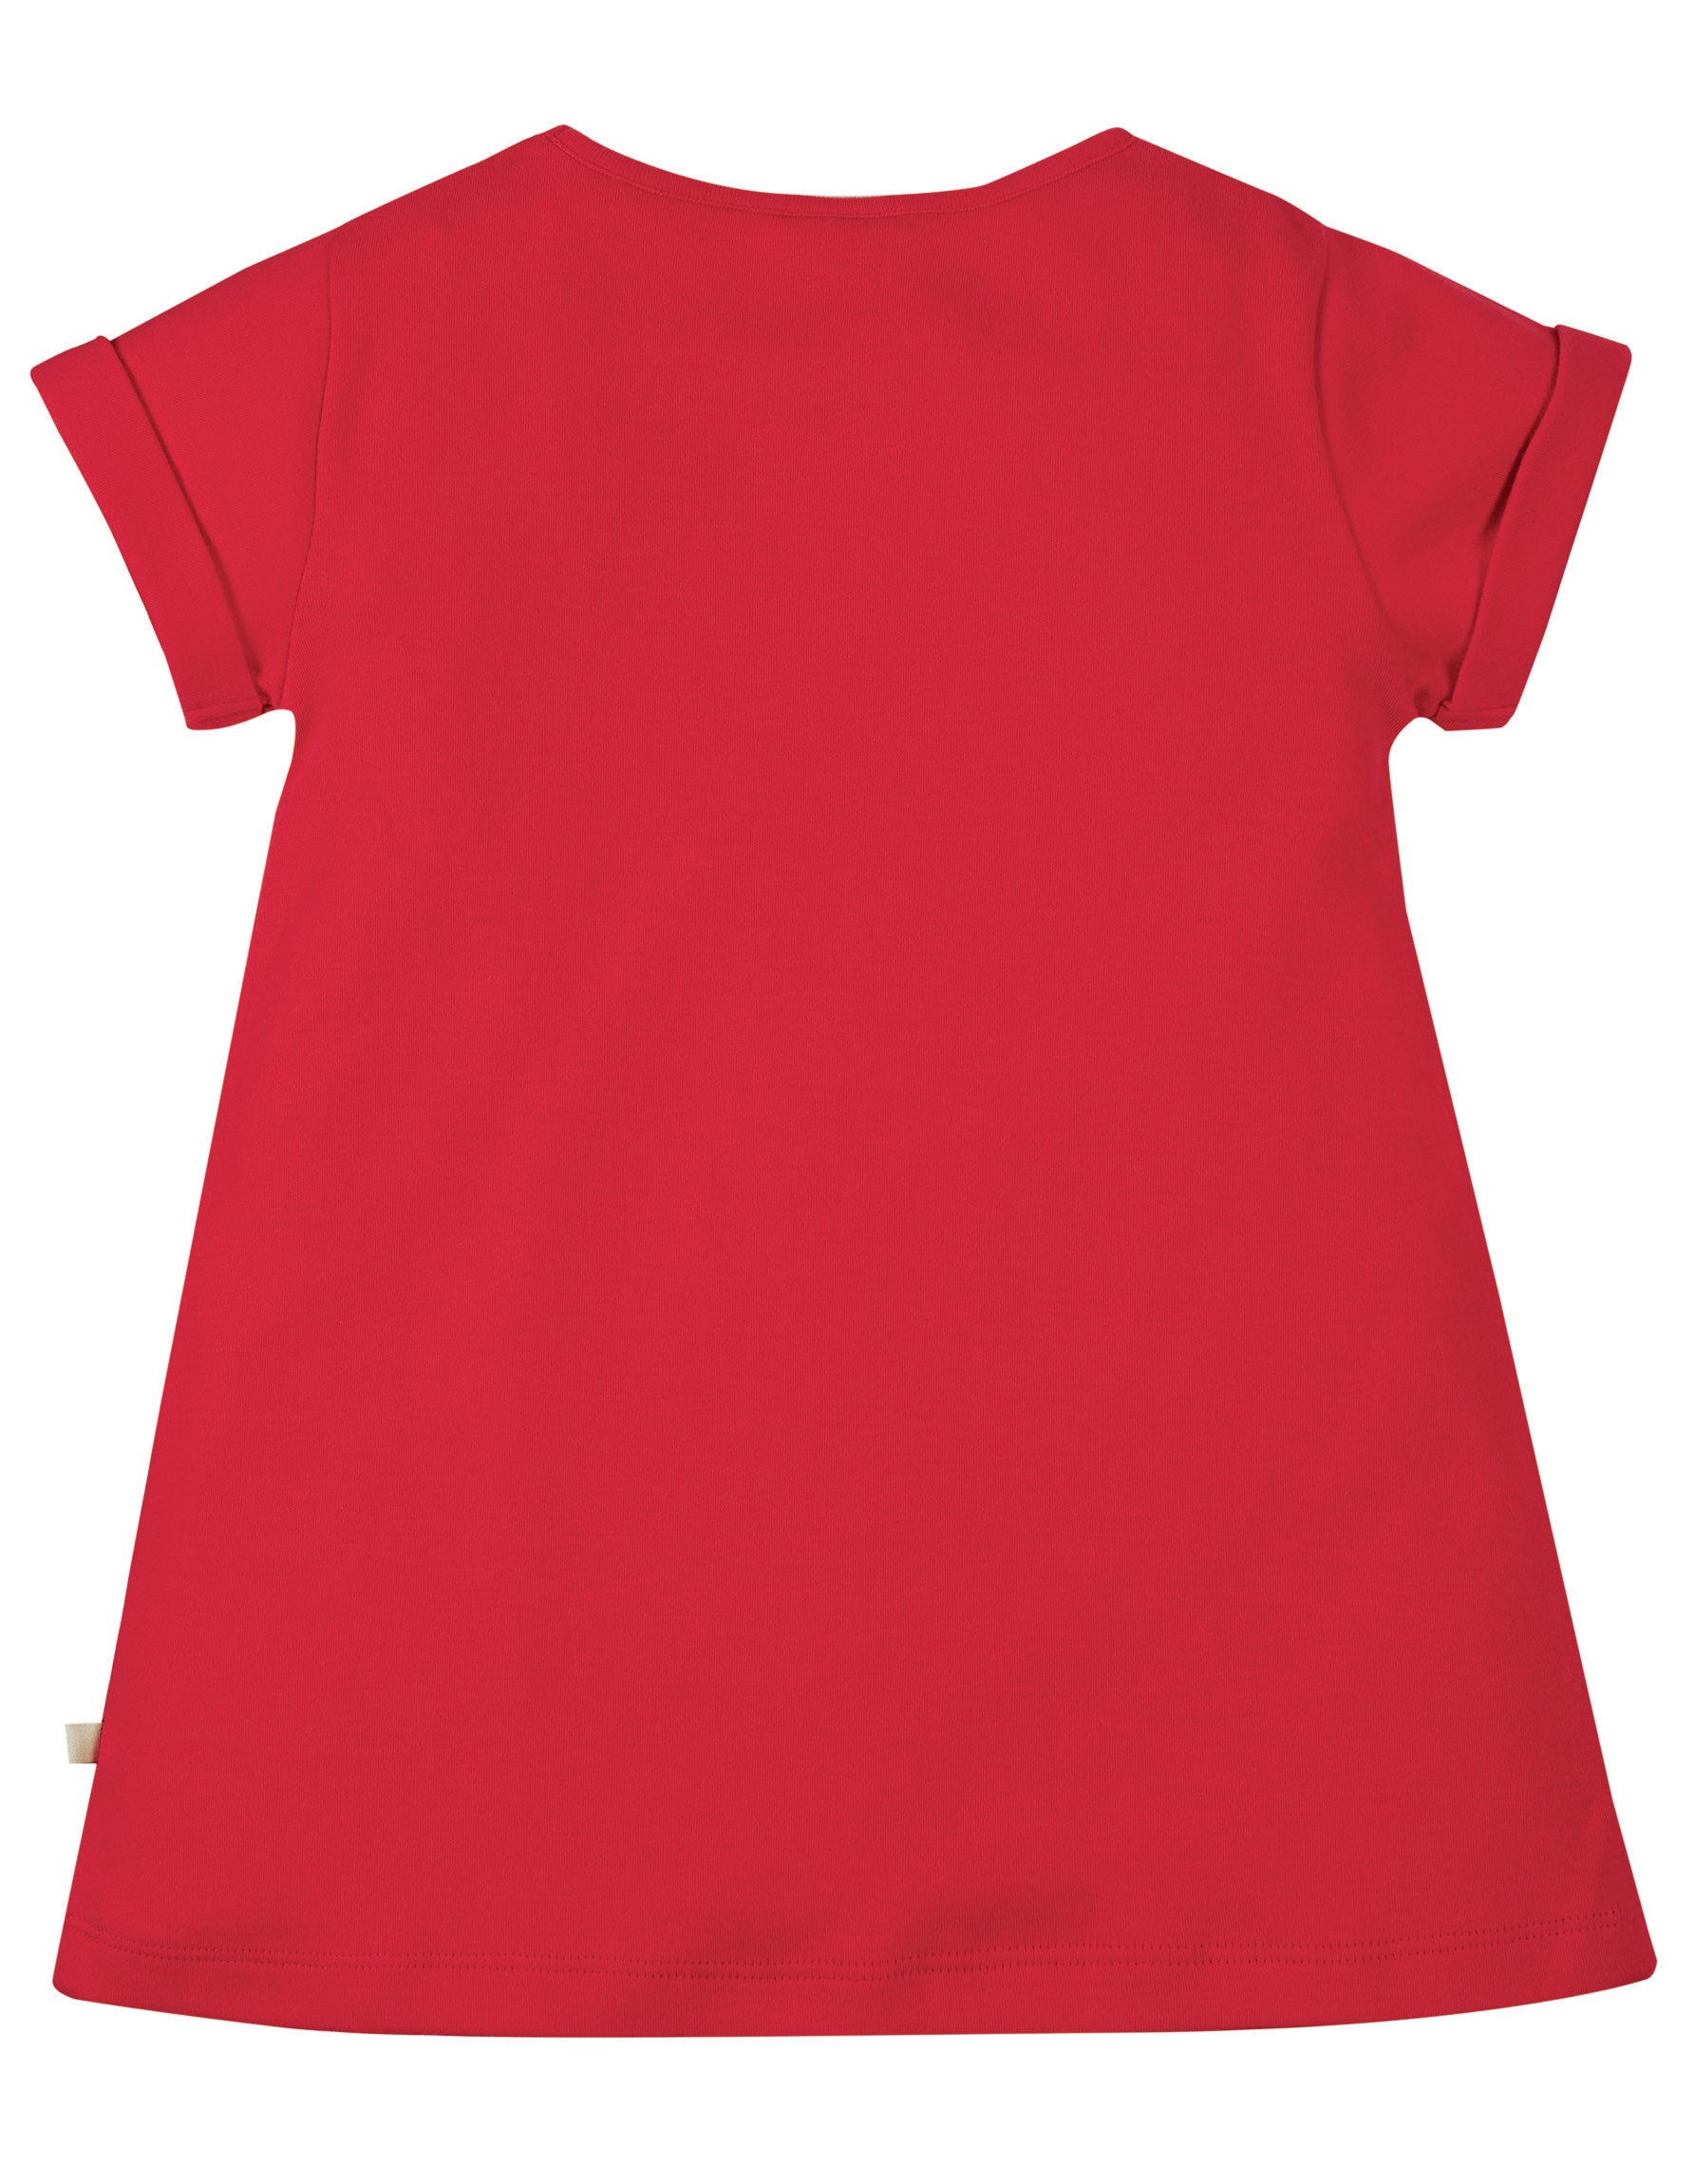 Frugi Sophie Applique Top Short Sleeve - True Red/Elephant